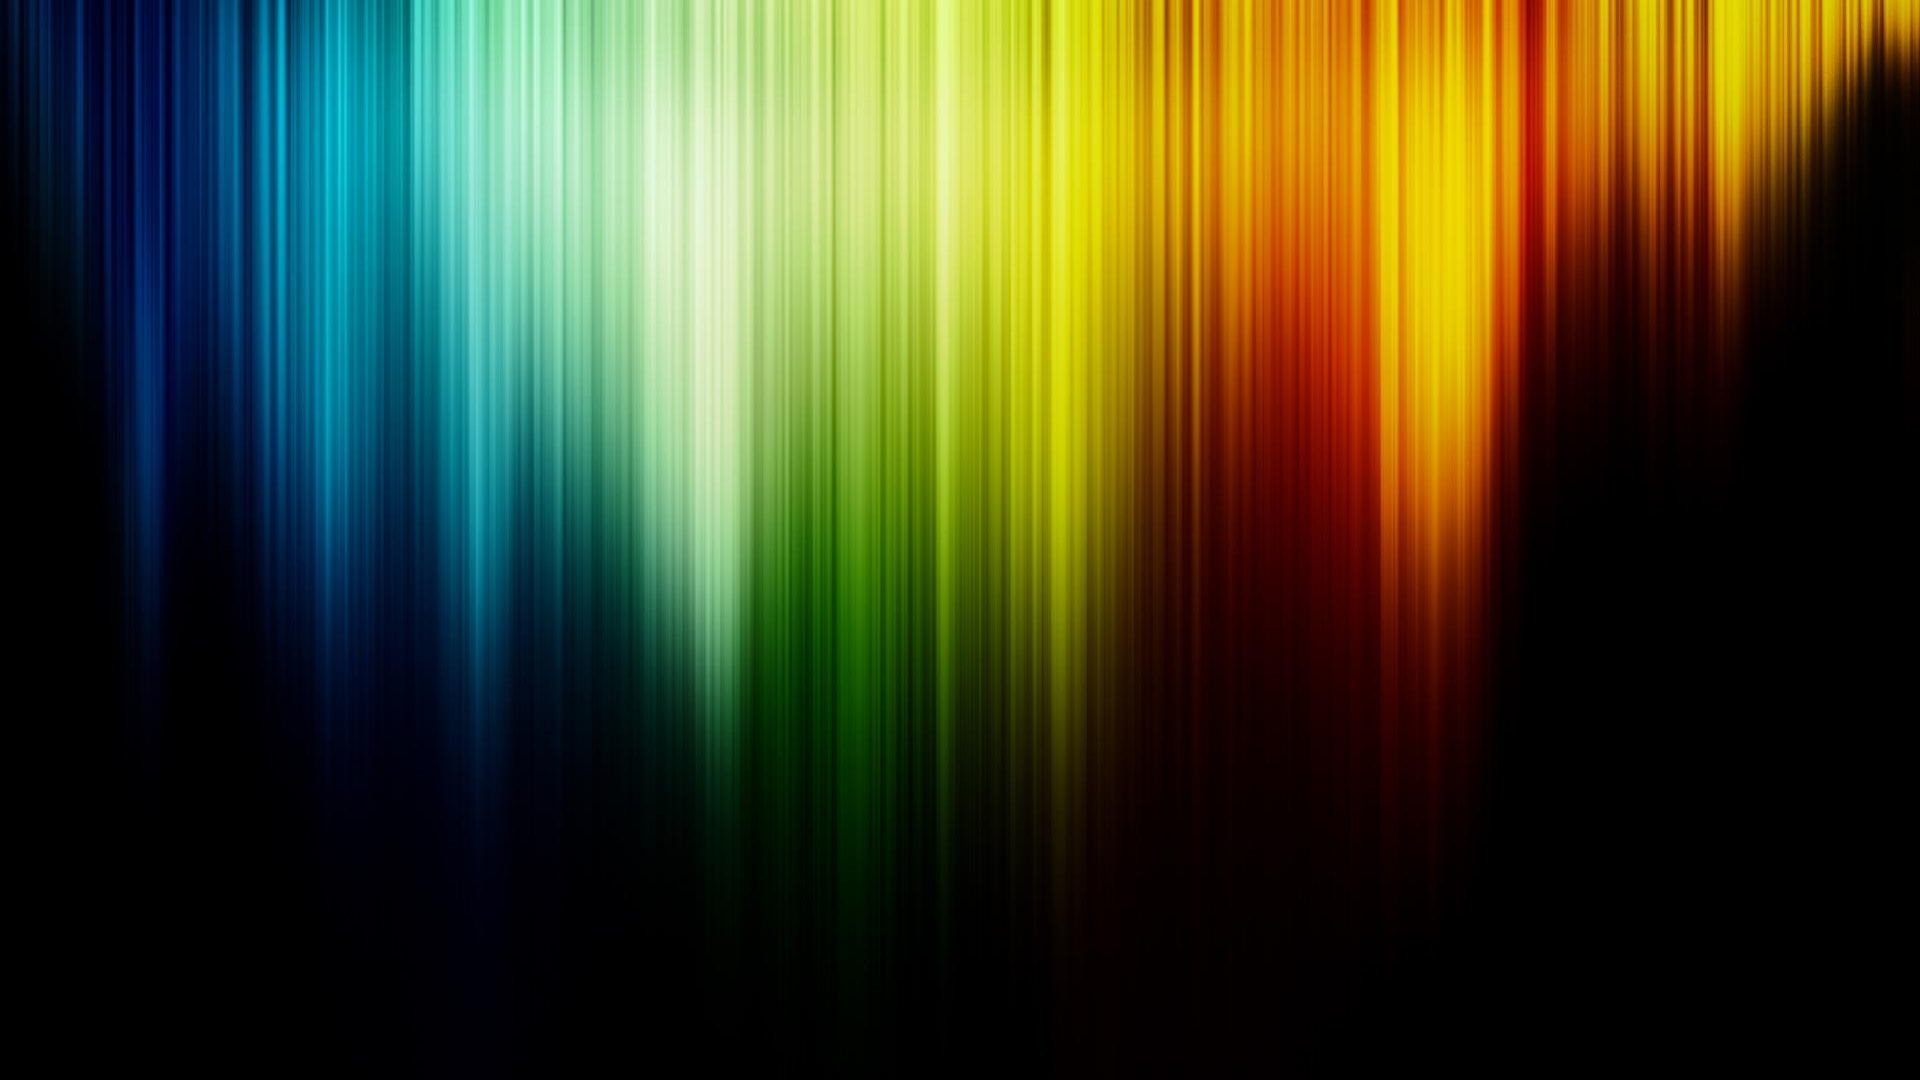 1920x1080 Bright color background wallpaper | ImageBank.biz